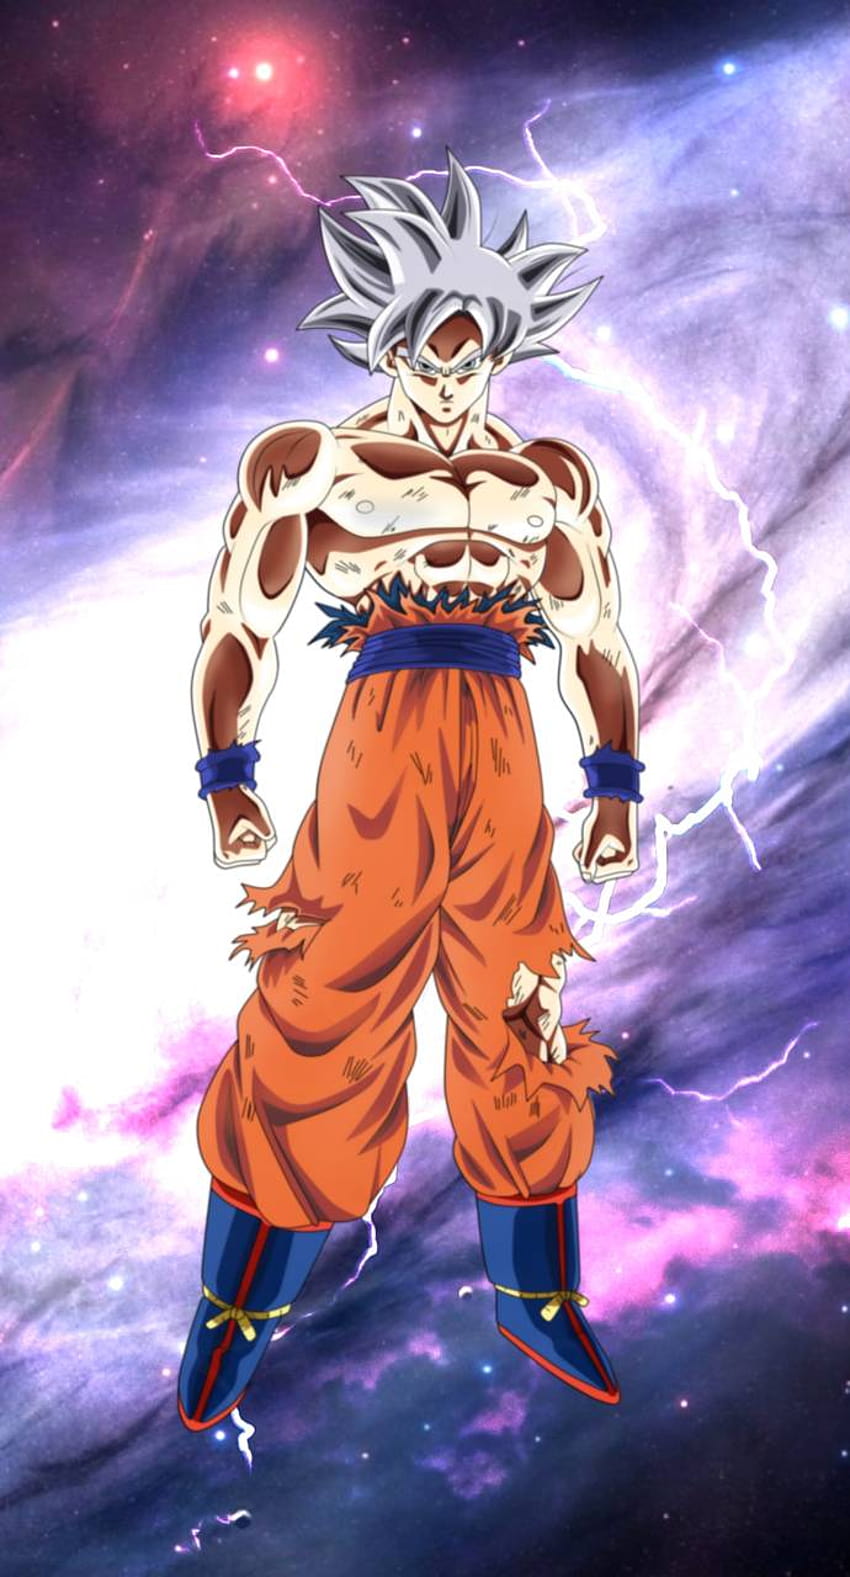 Goku Ultra instinct Wallpapers - Top 25 Best Goku Ultra instinct Backgrounds